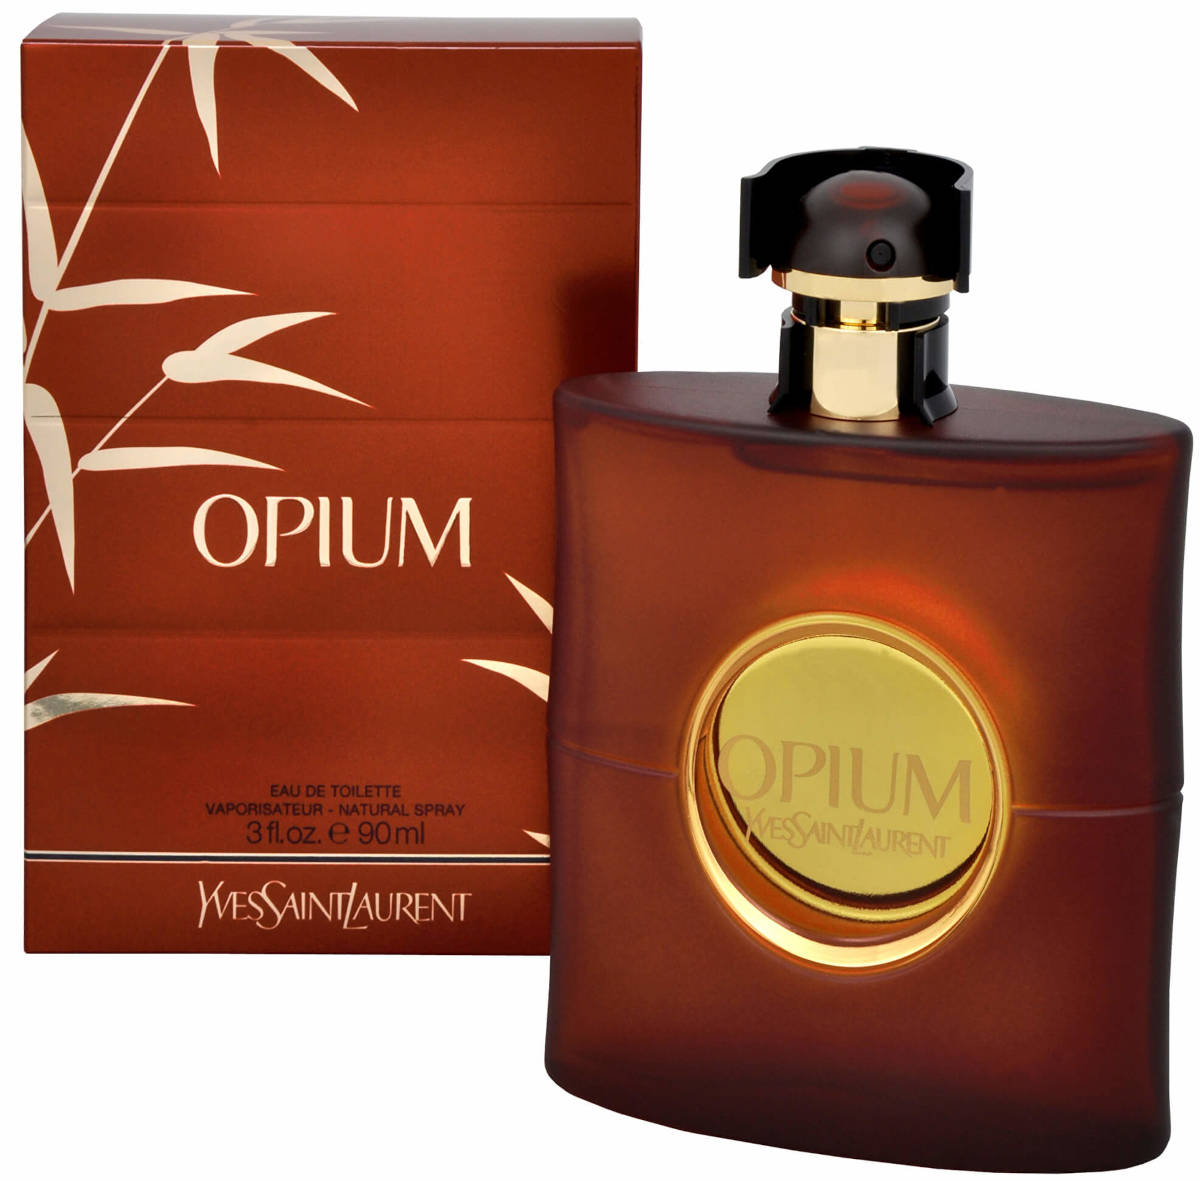 Yves Saint Laurent Opium profumo